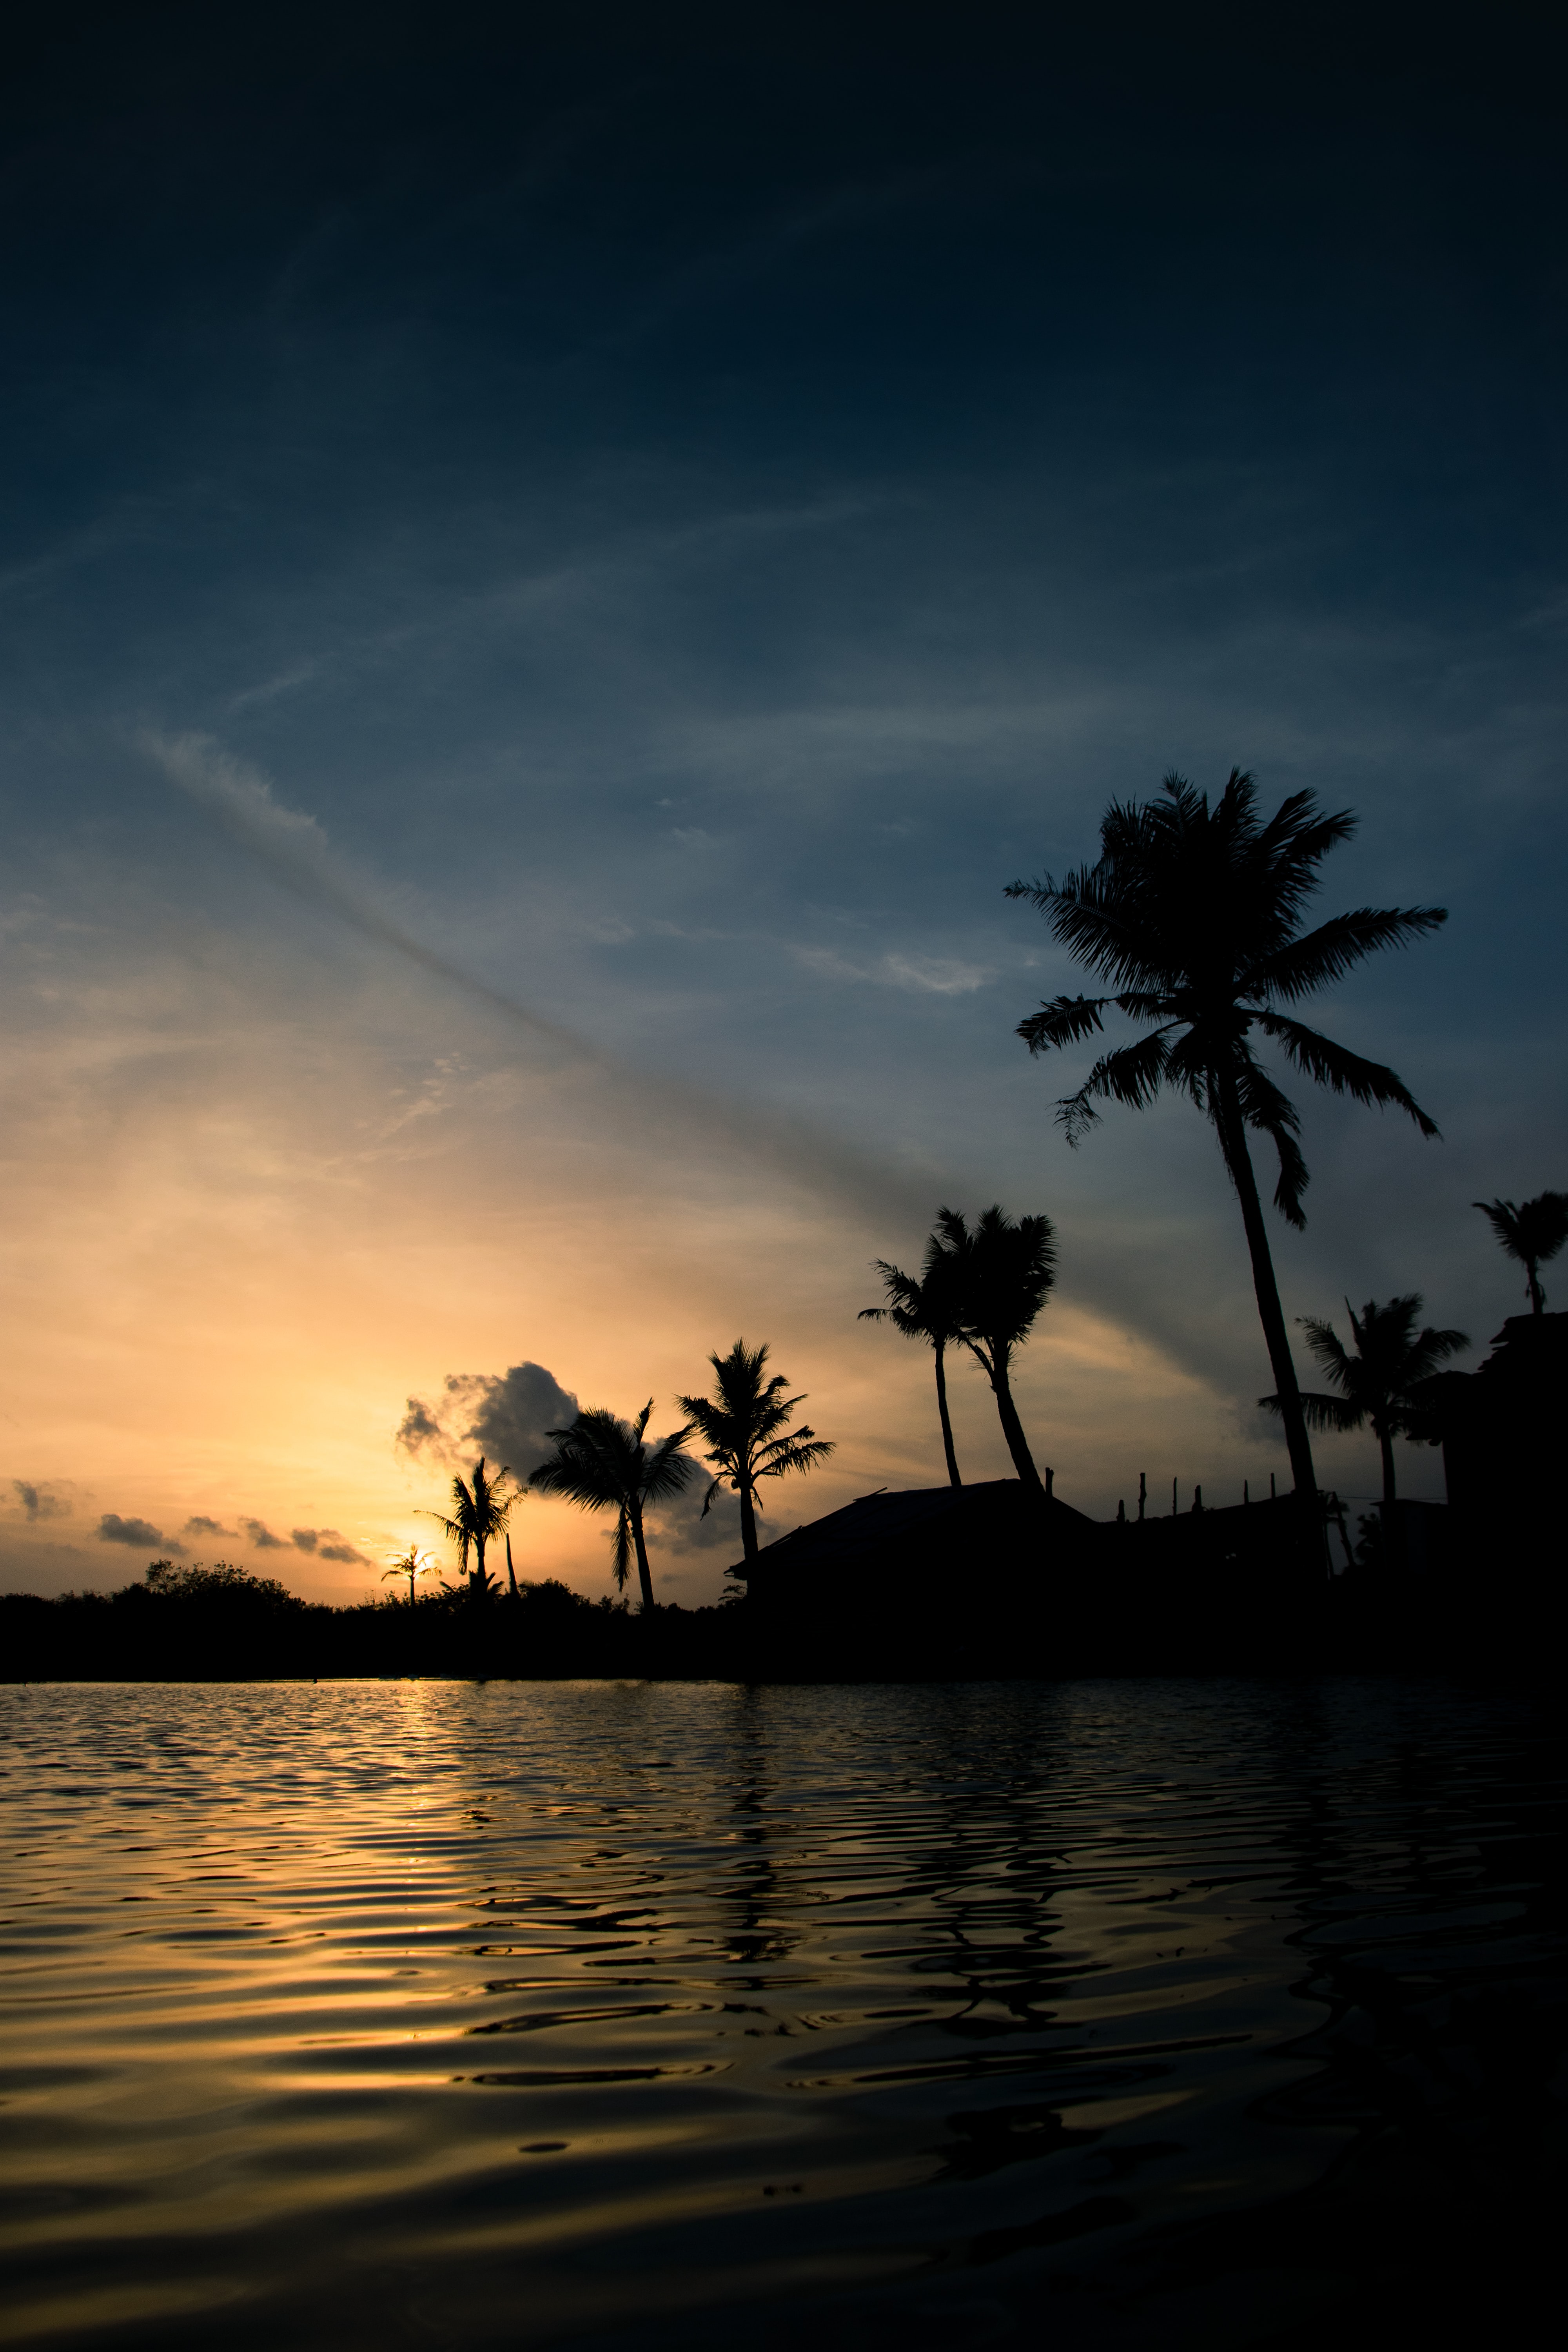 india, palms, dark, sunset, sea, structure